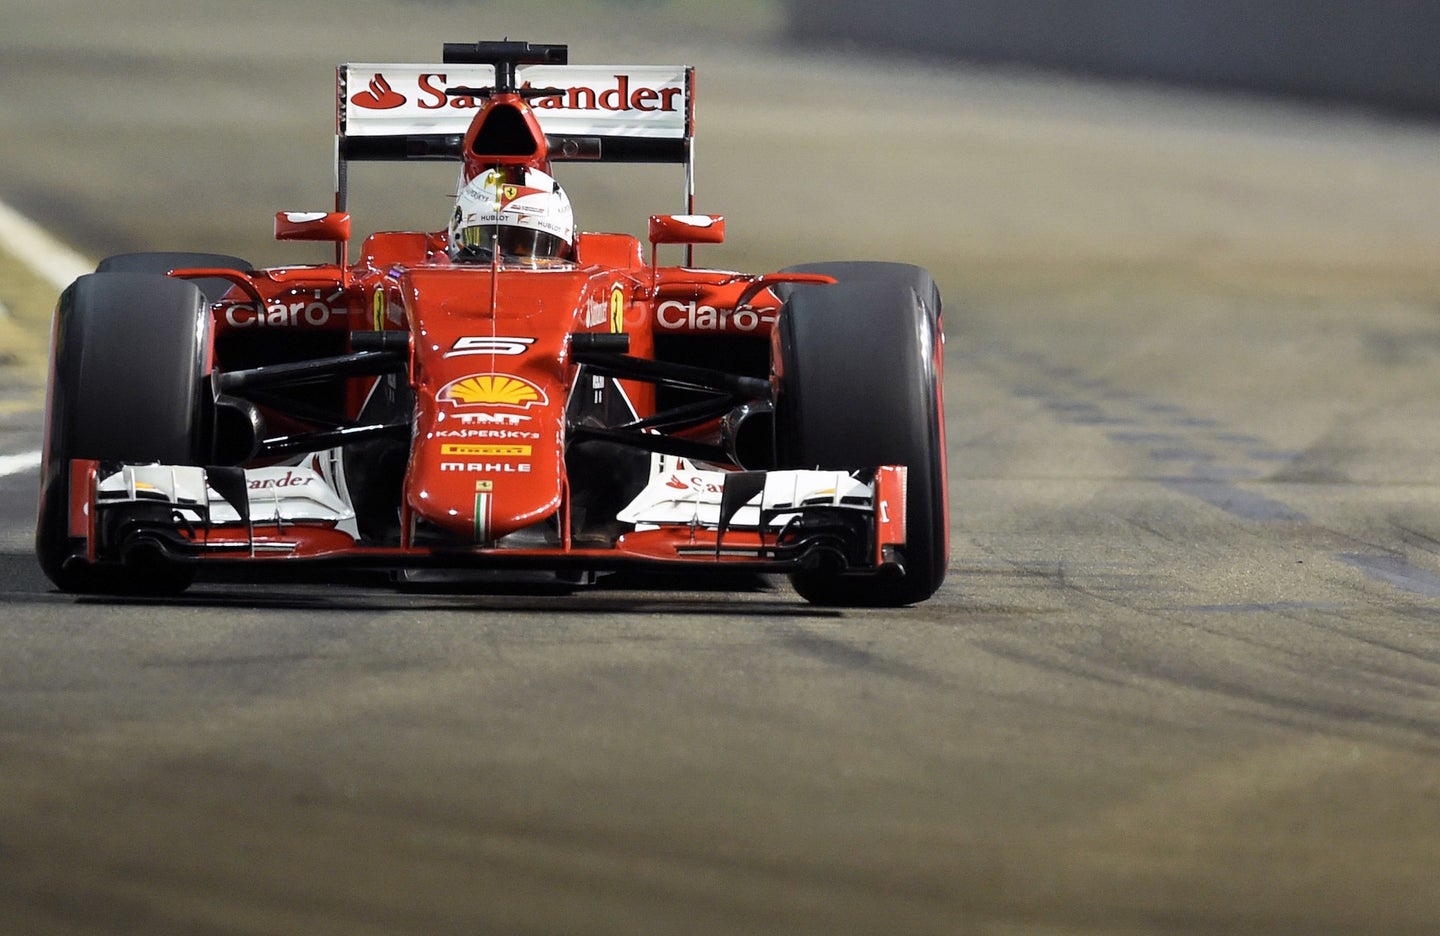 Watch Sebastien Vettel Crash His Ferrari F1 Car In the Wet While Testing Pirelli Tires